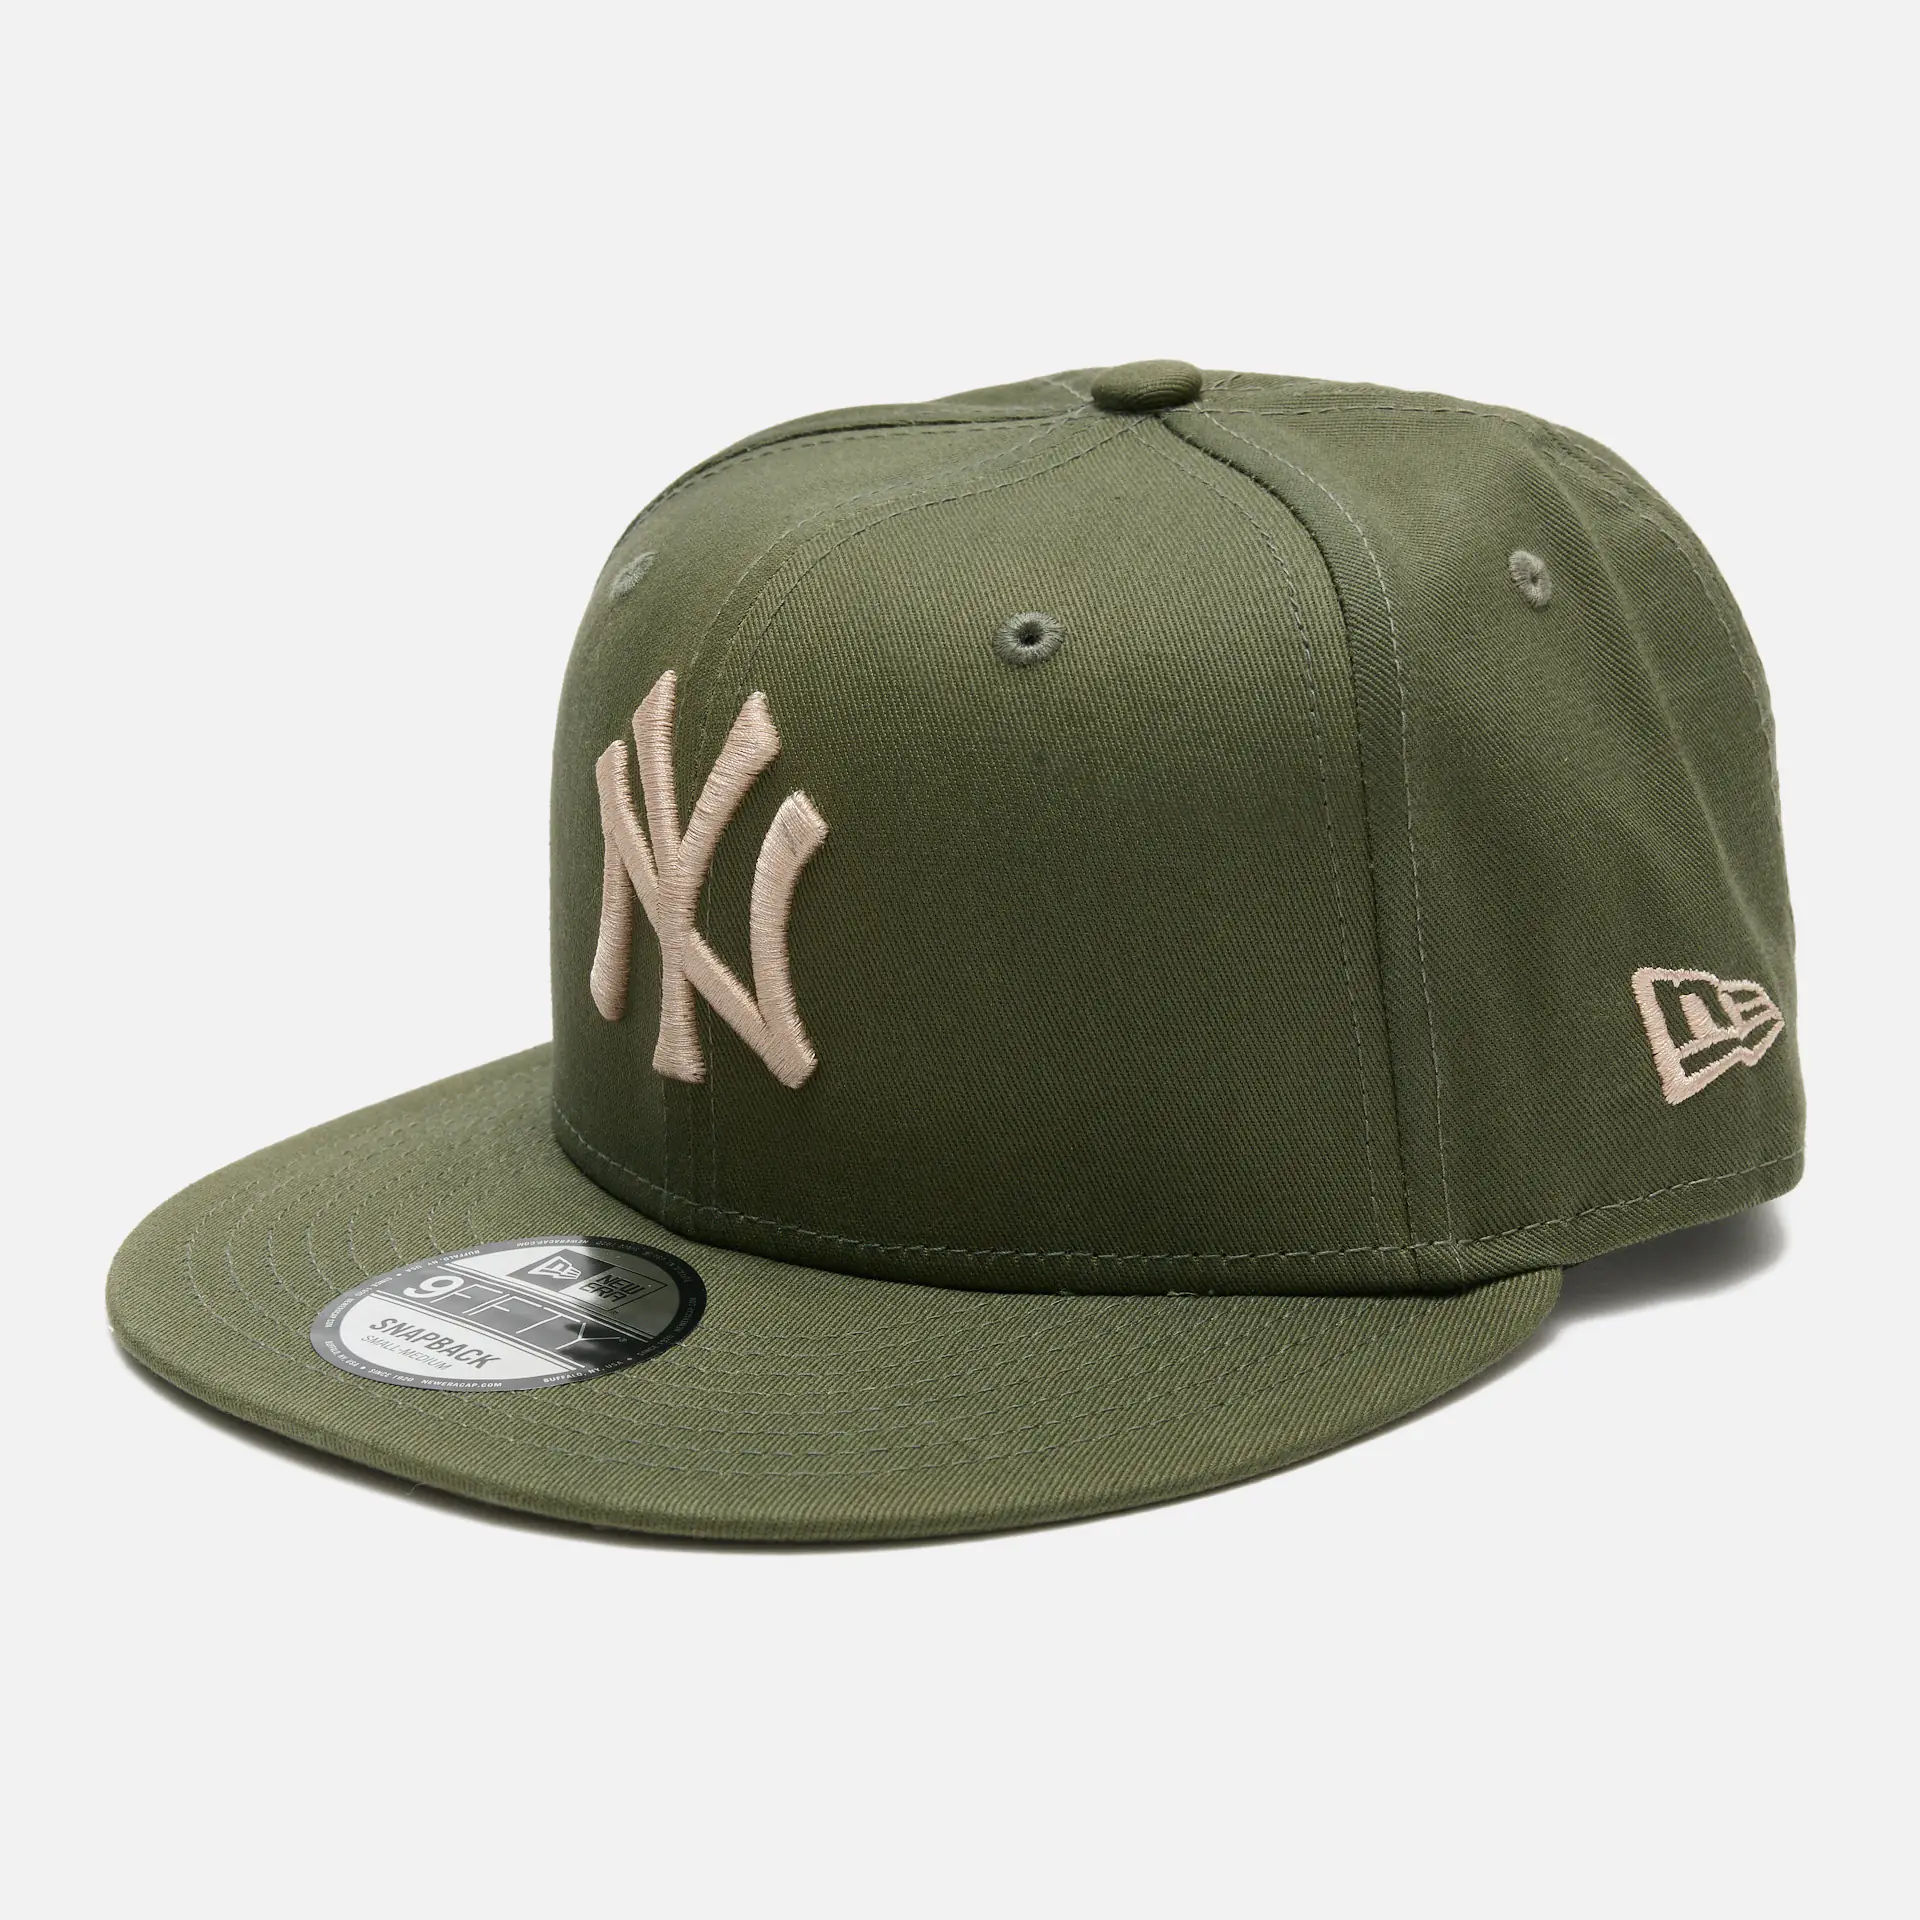 New Era MLB NY Yankees League Essential 9Fifty Snapback Cap New Olive/Stone